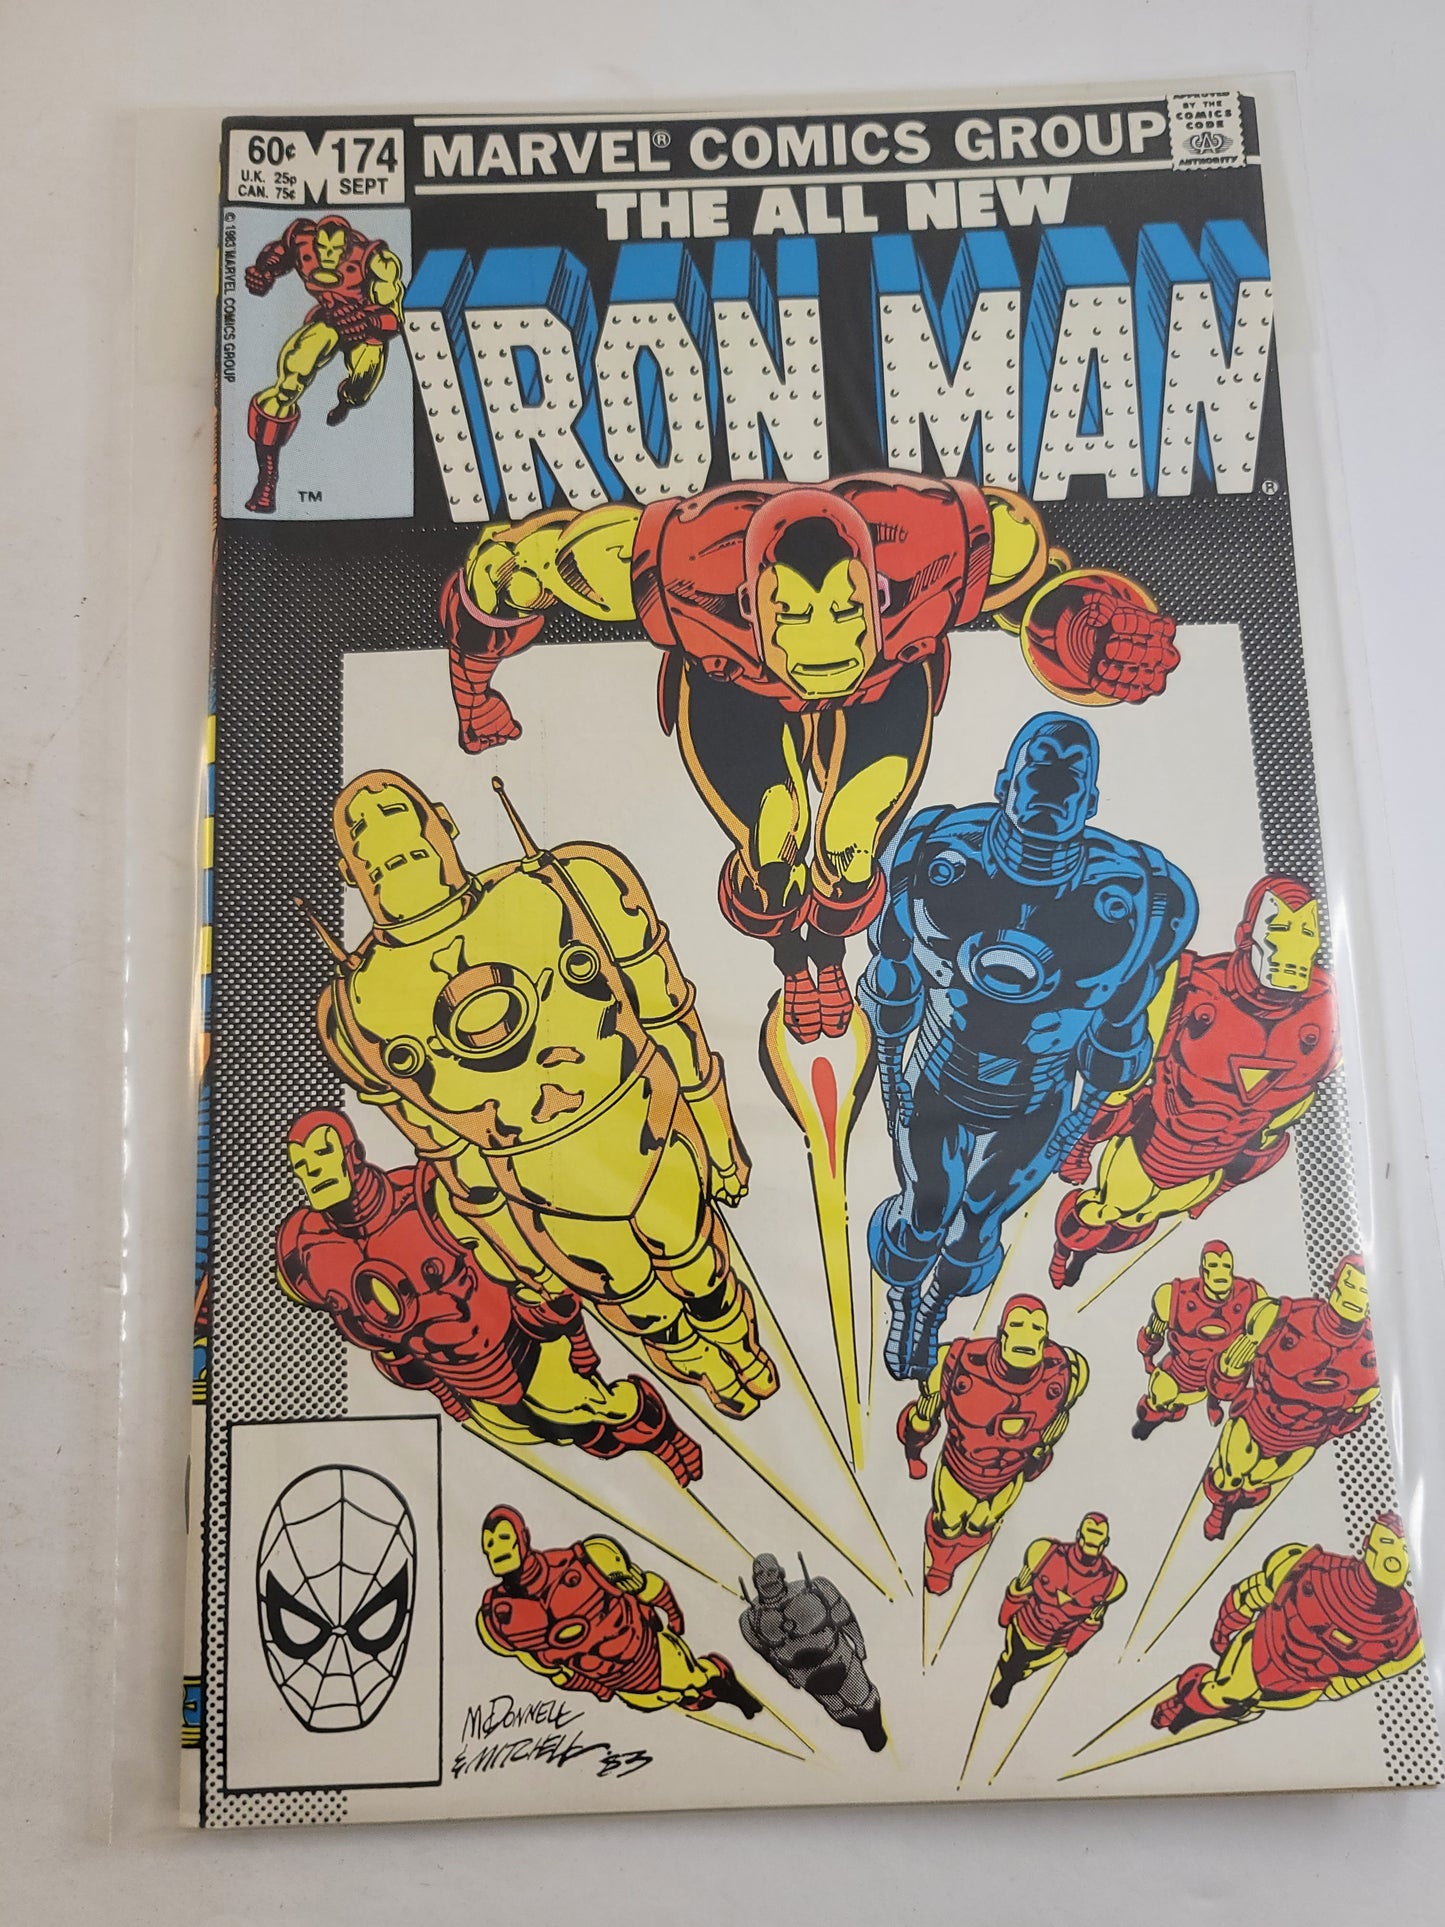 Iron Man Volume 1 Issues 167 168 169 170 171 172 173 174